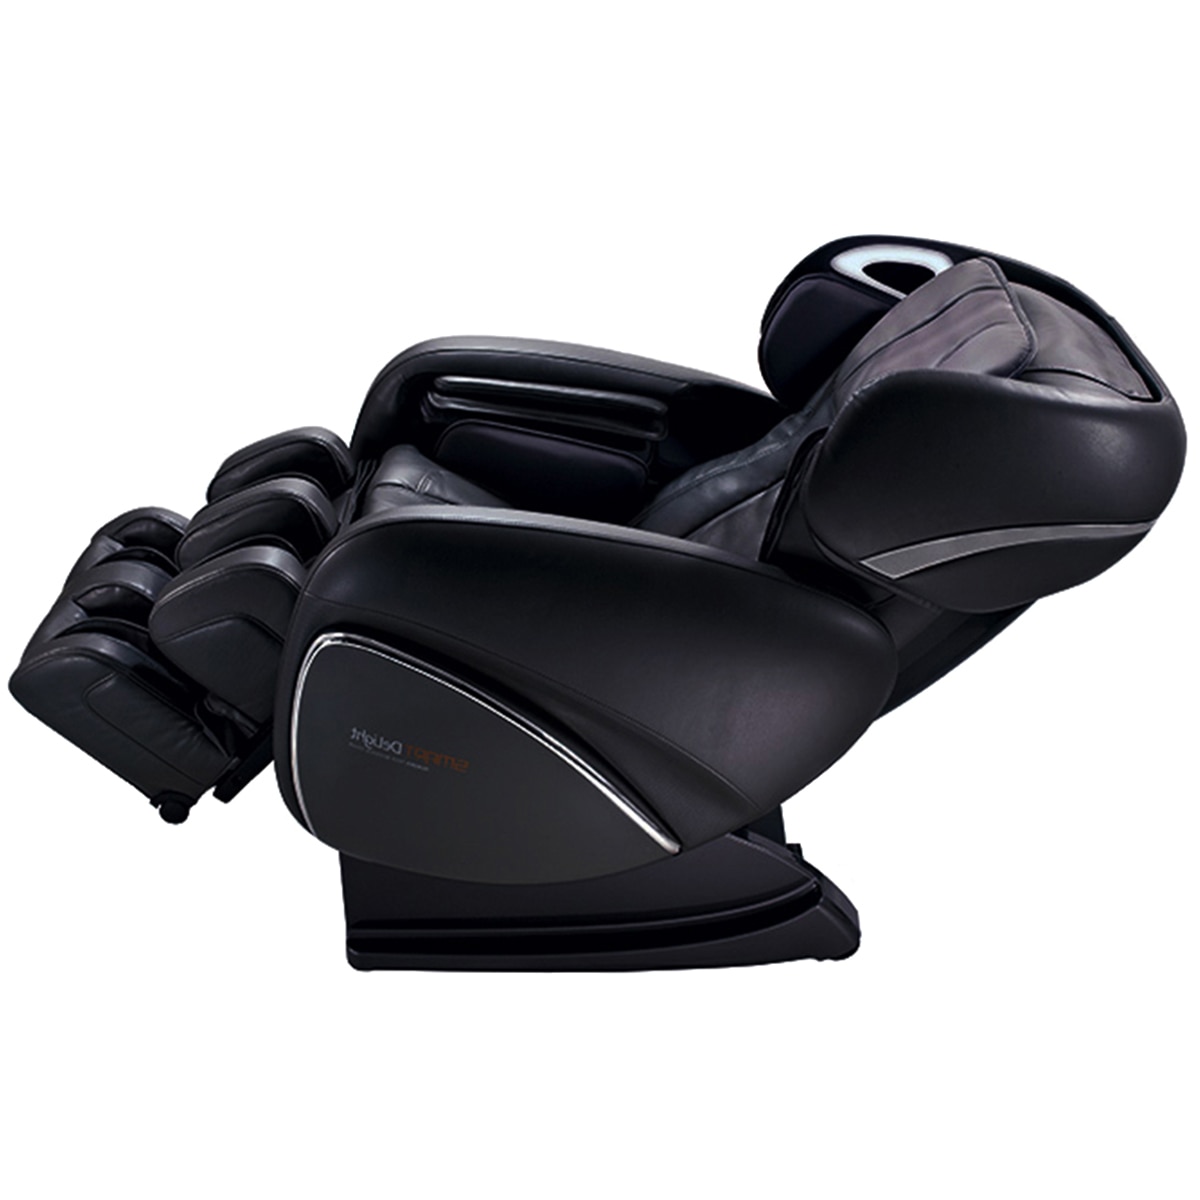 Ogawa Smart Delight Plus Massage Chair Black